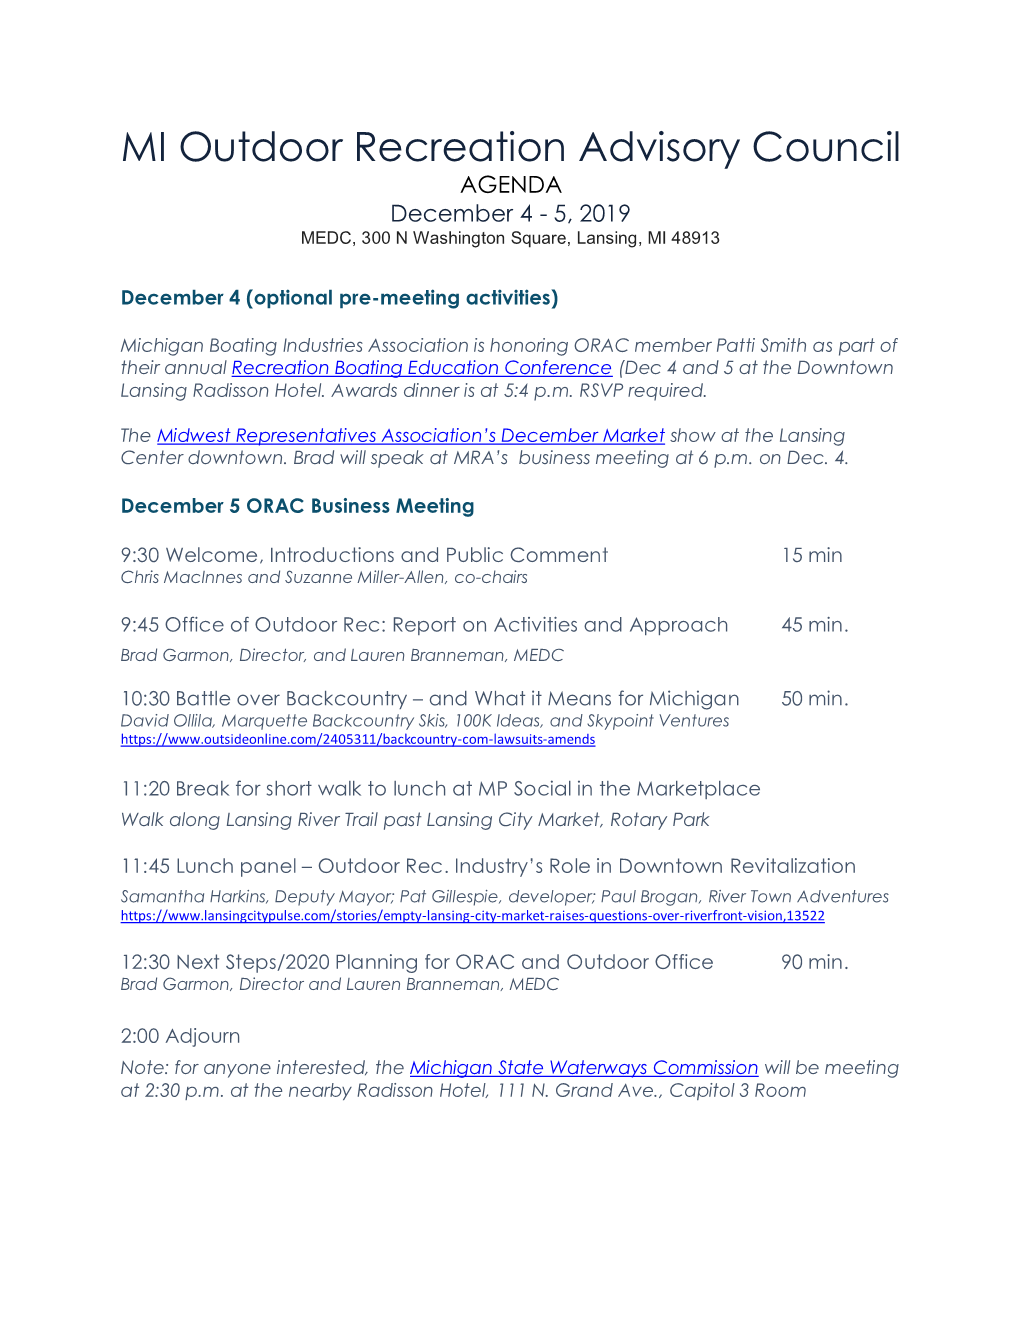 MI Outdoor Recreation Advisory Council AGENDA December 4 - 5, 2019 MEDC, 300 N Washington Square, Lansing, MI 48913